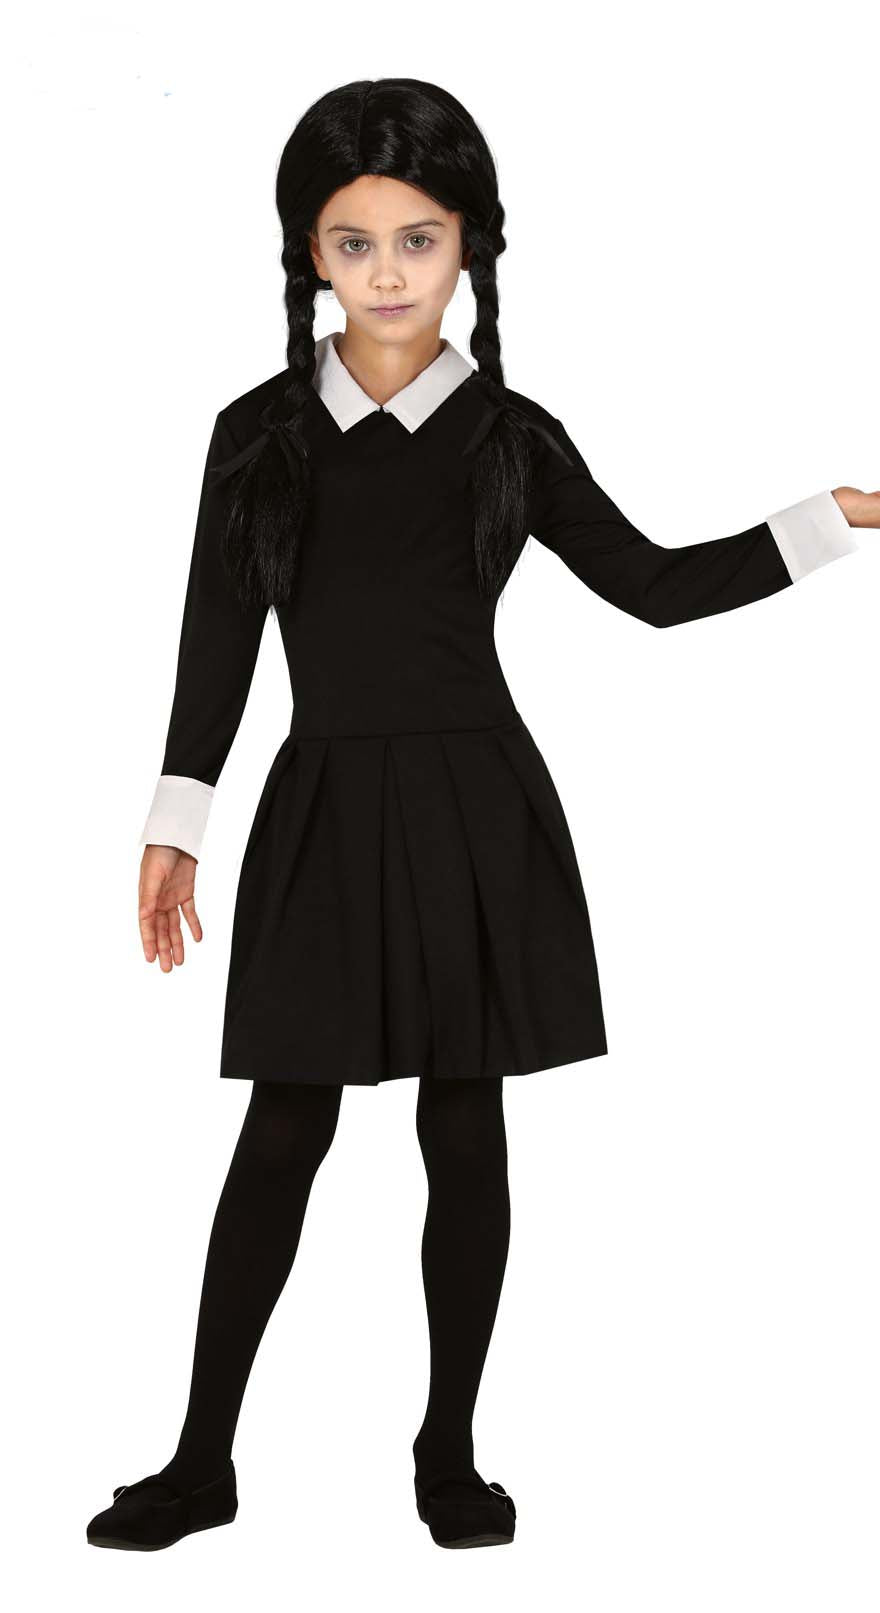 Wednesday Addams fancy dress costume